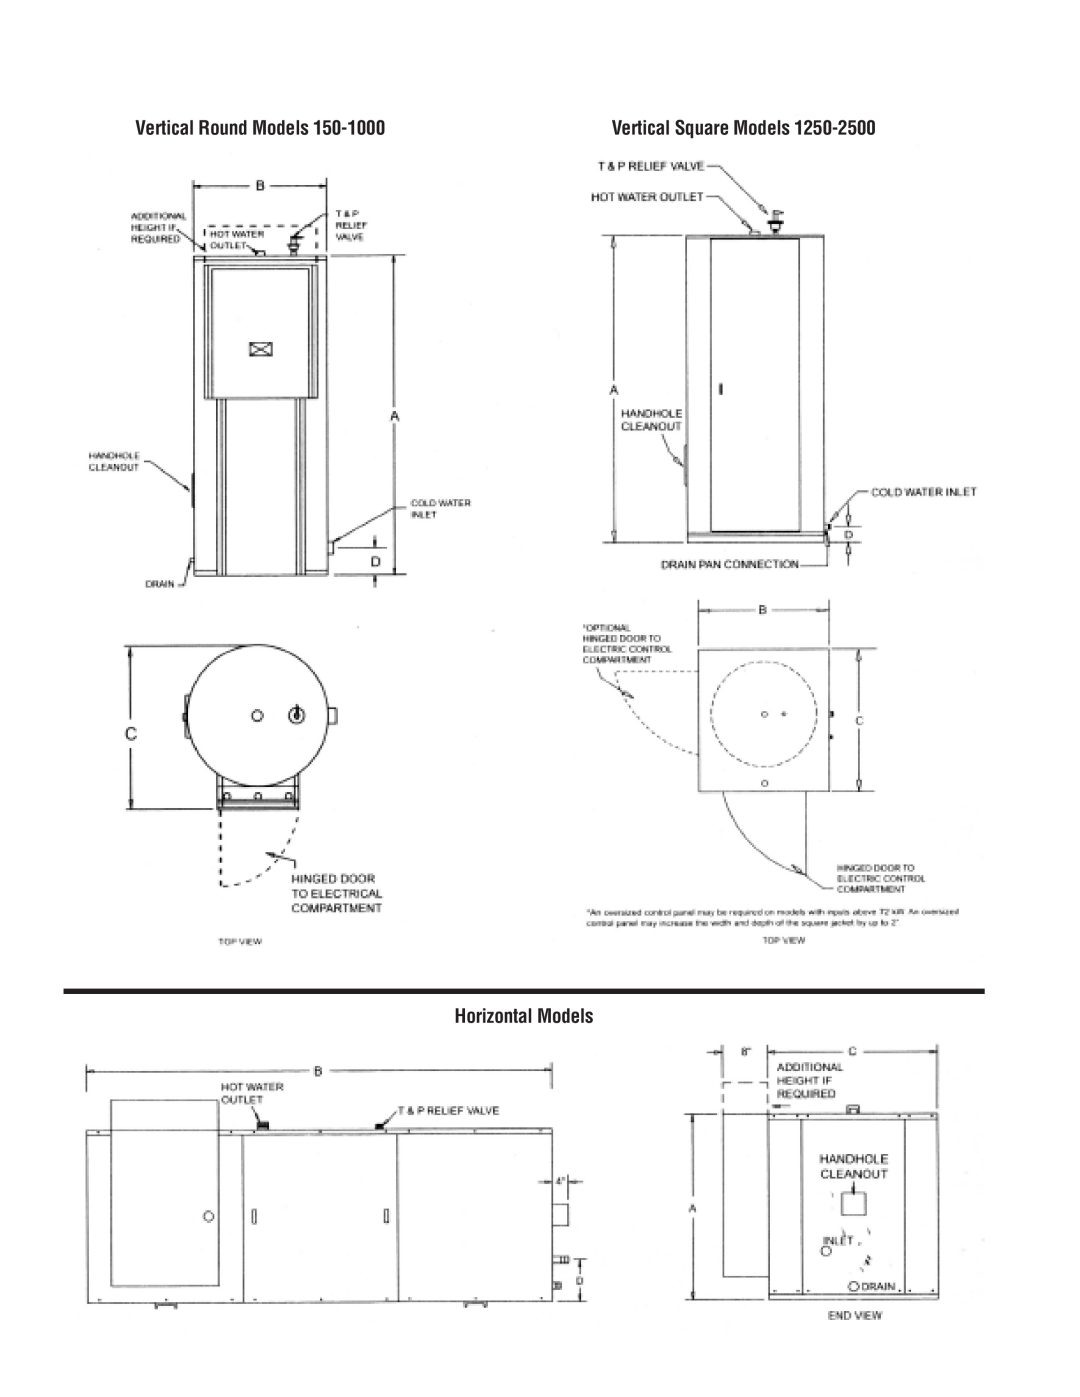 Rheem High-Power Commercial Water Heater warranty Vertical Round Models, Vertical Square Models, Horizontal Models 